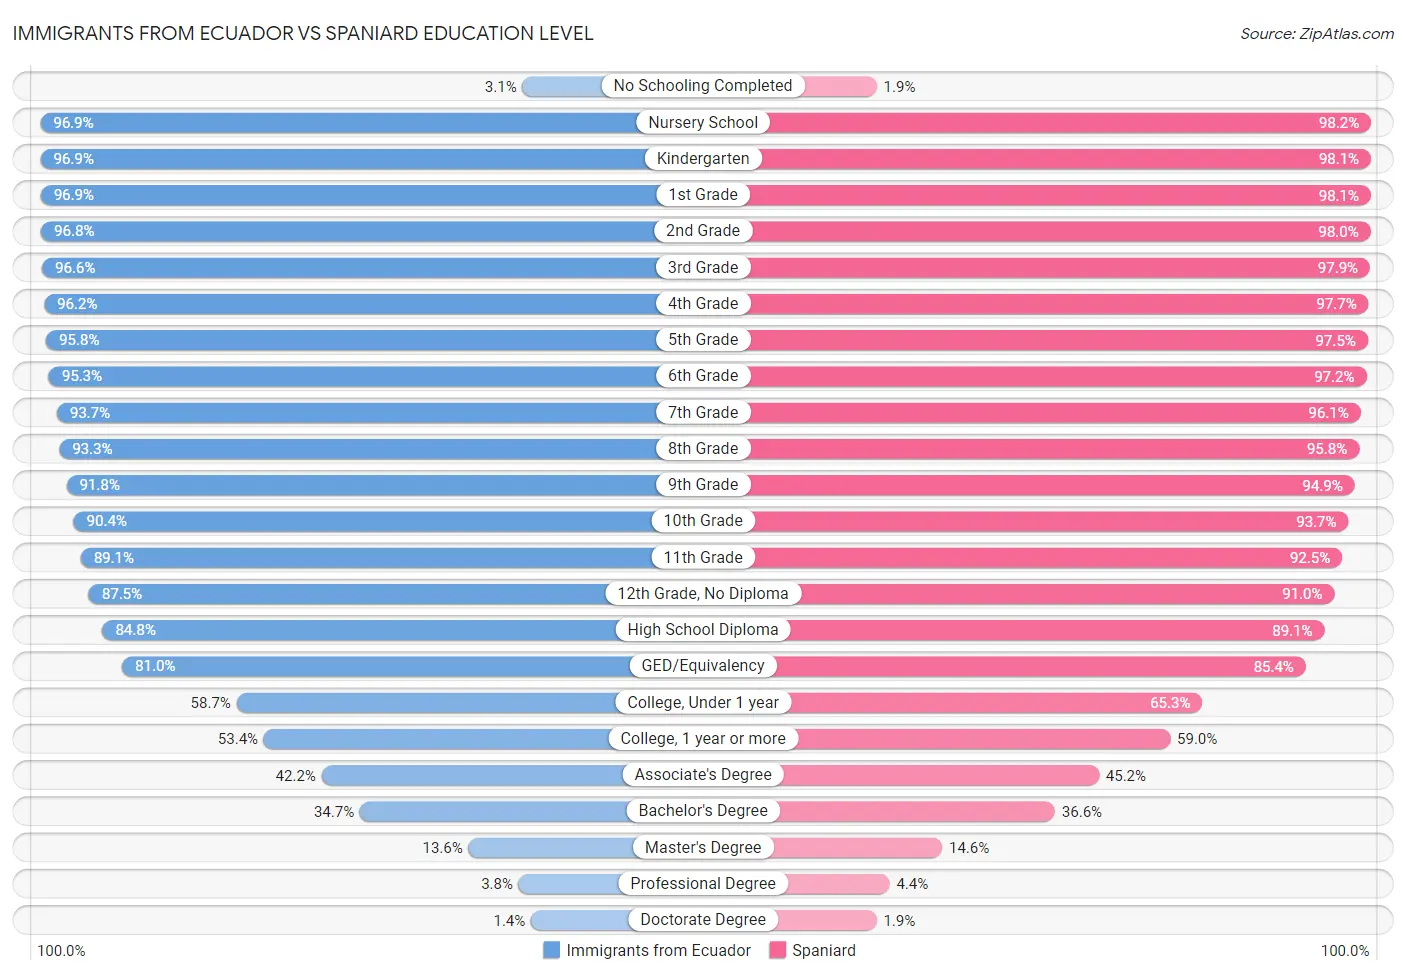 Immigrants from Ecuador vs Spaniard Education Level